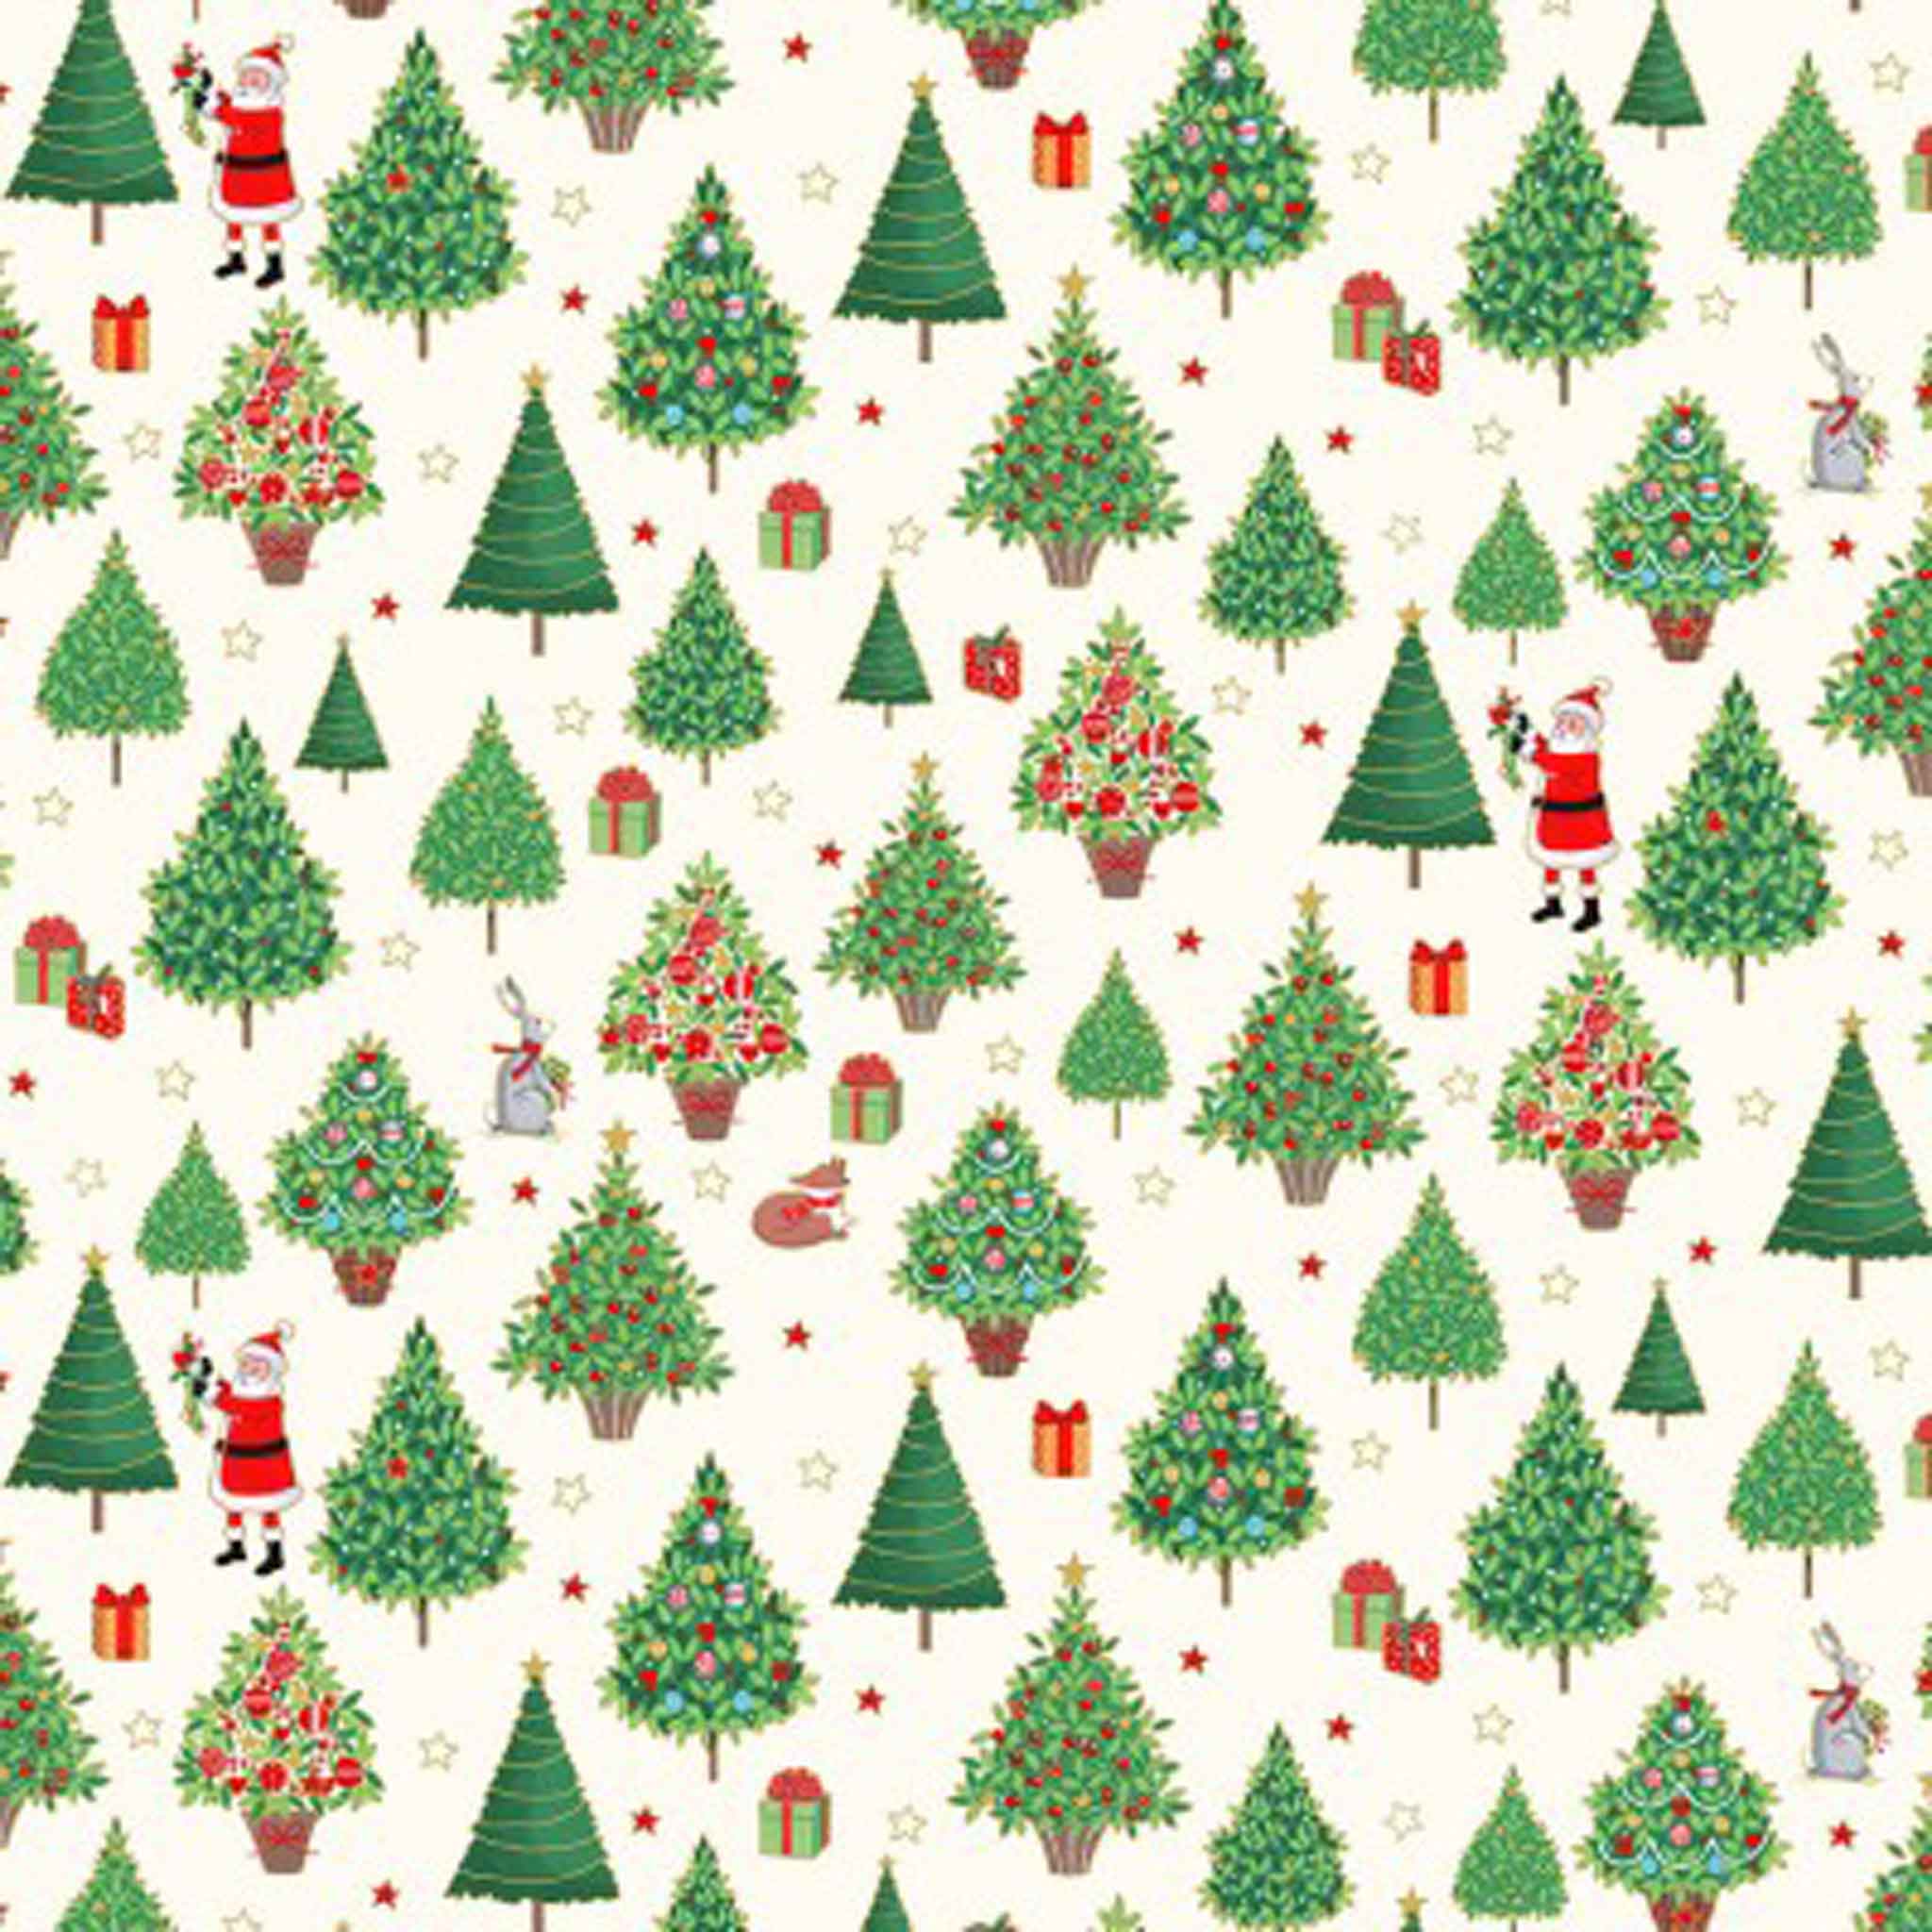 Christmas Trees Cotton Fabric - Cream - Gold Metallic - Makower 2481/Q - Merry Christmas